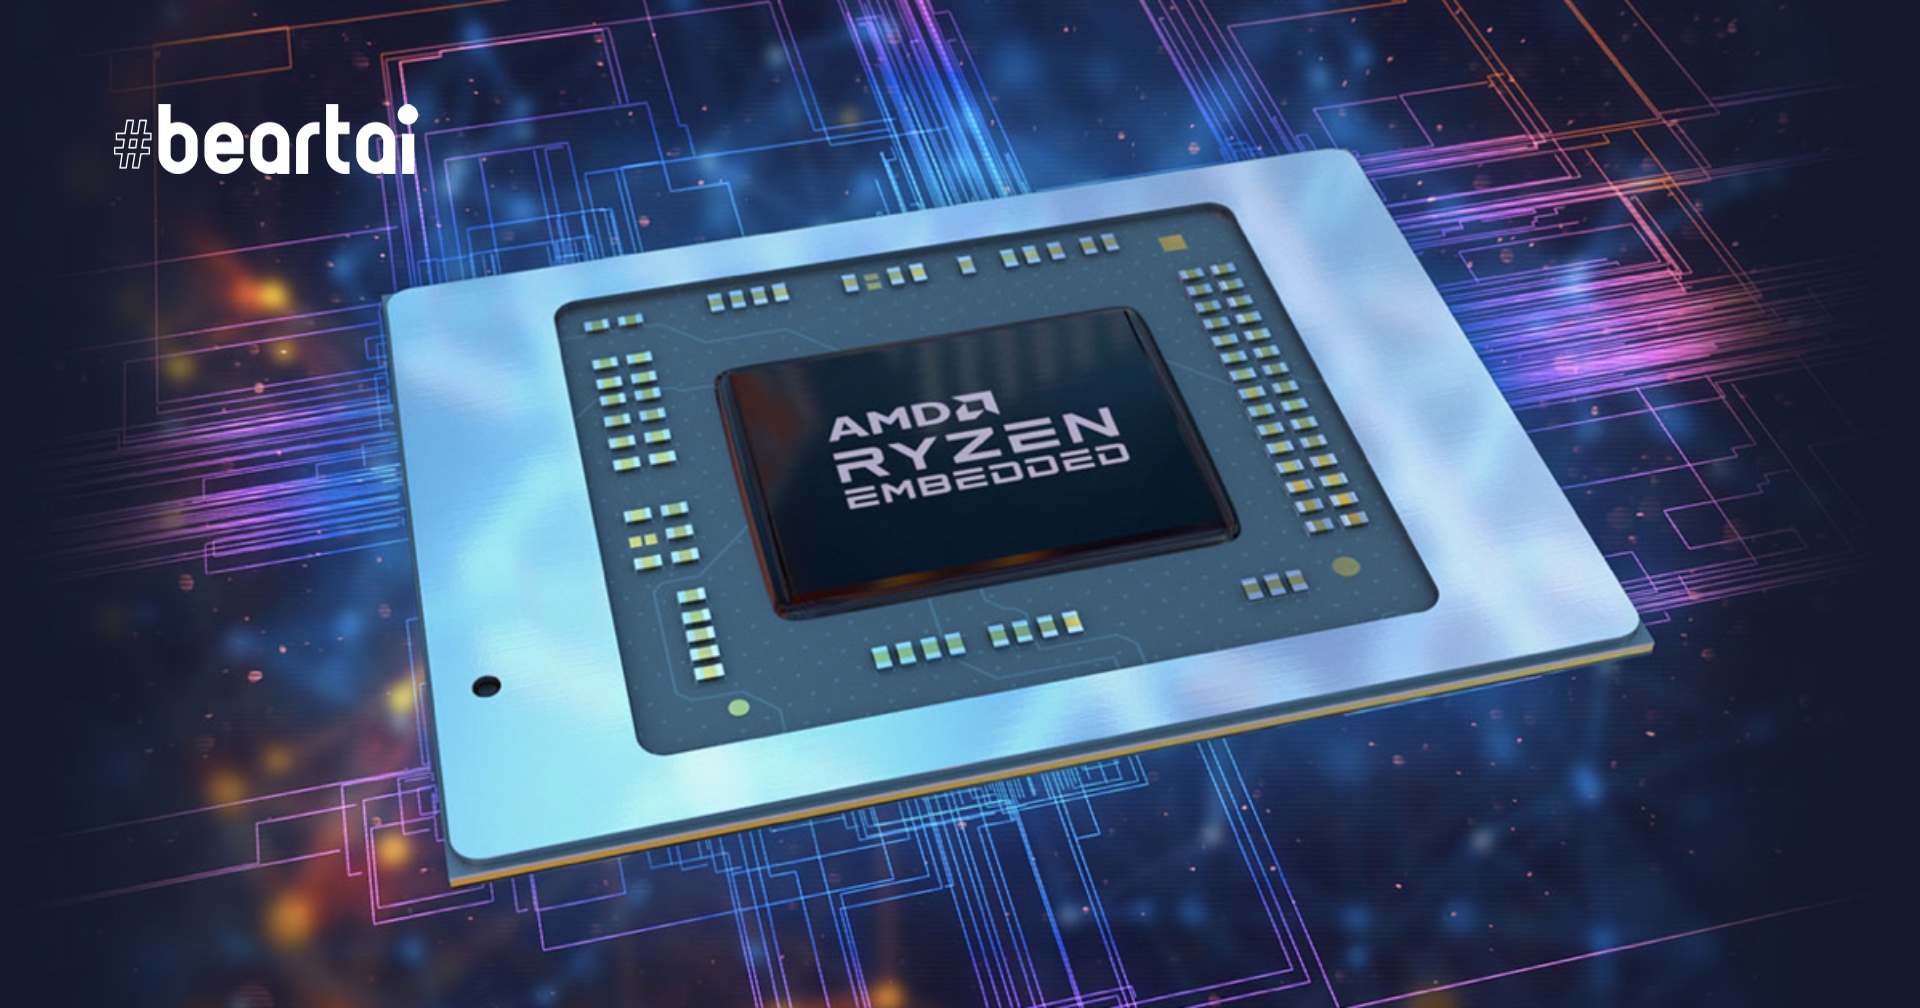 AMD อาจยืมมือ Samsung ช่วยผลิตชิป หลัง TSMC ไม่สามารถรับออเดอร์ได้มากตามต้องการ